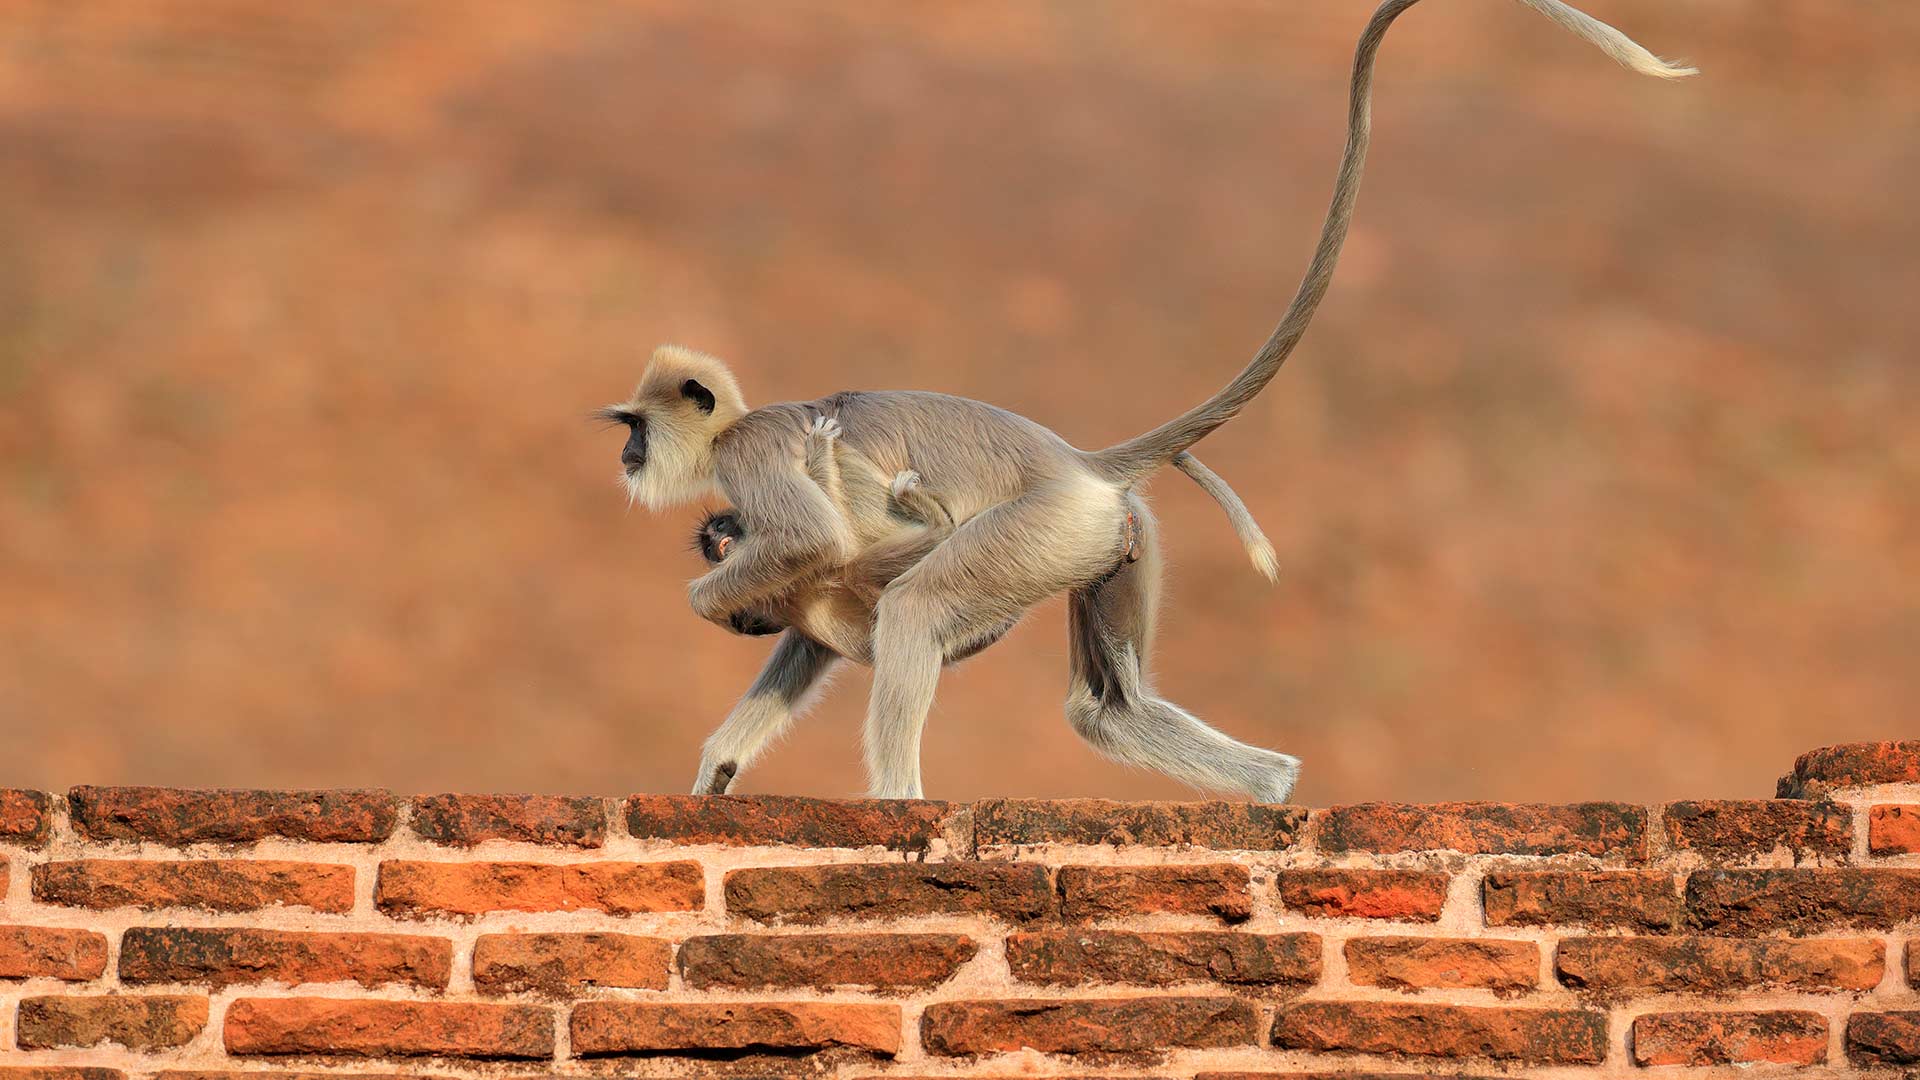 Monkey in wildlife park